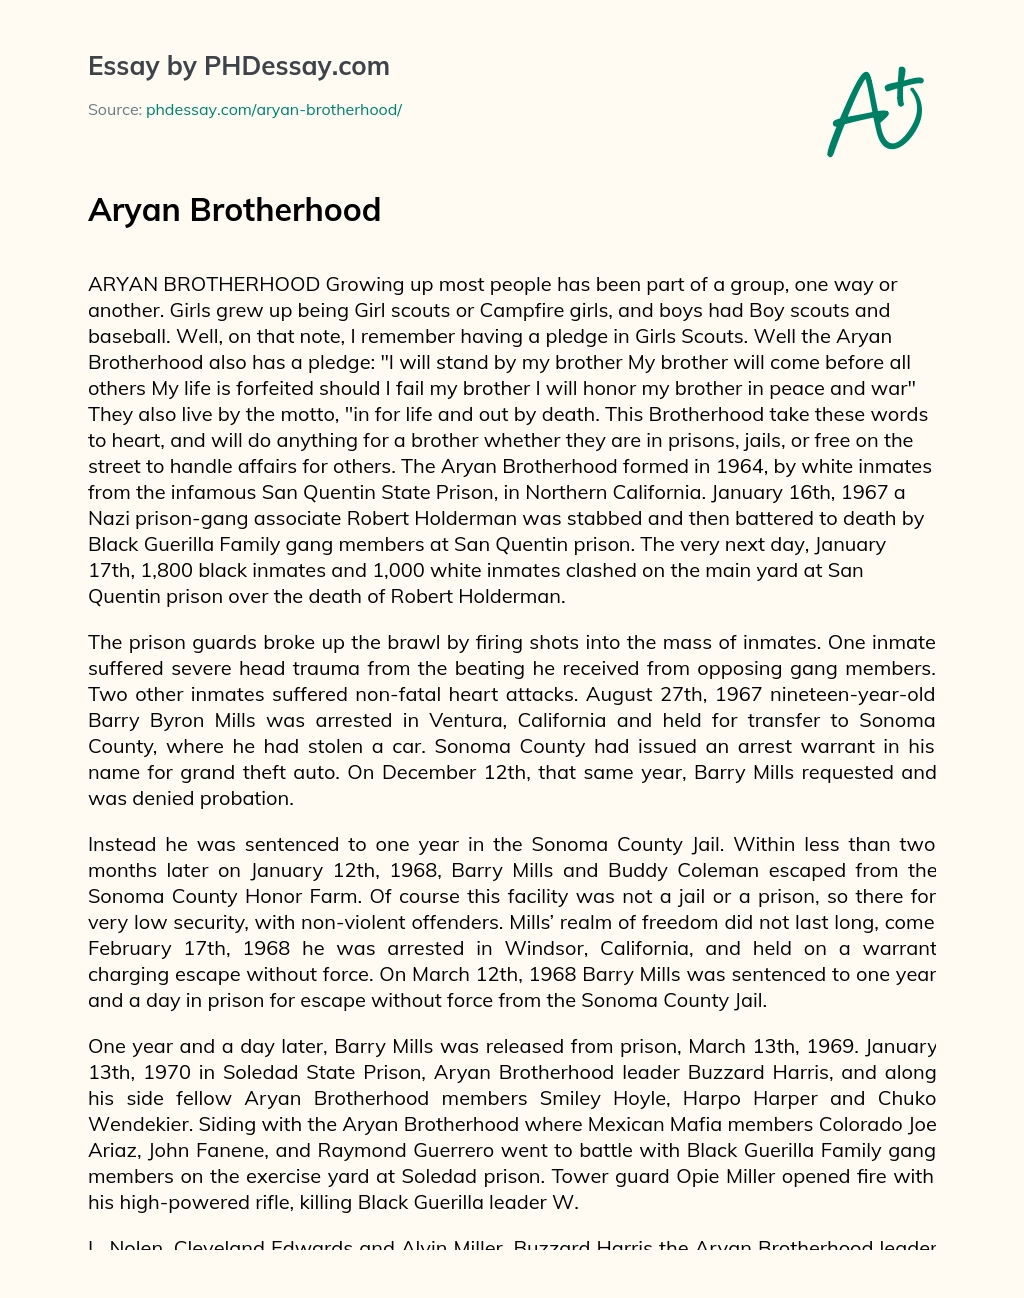 Aryan Brotherhood essay